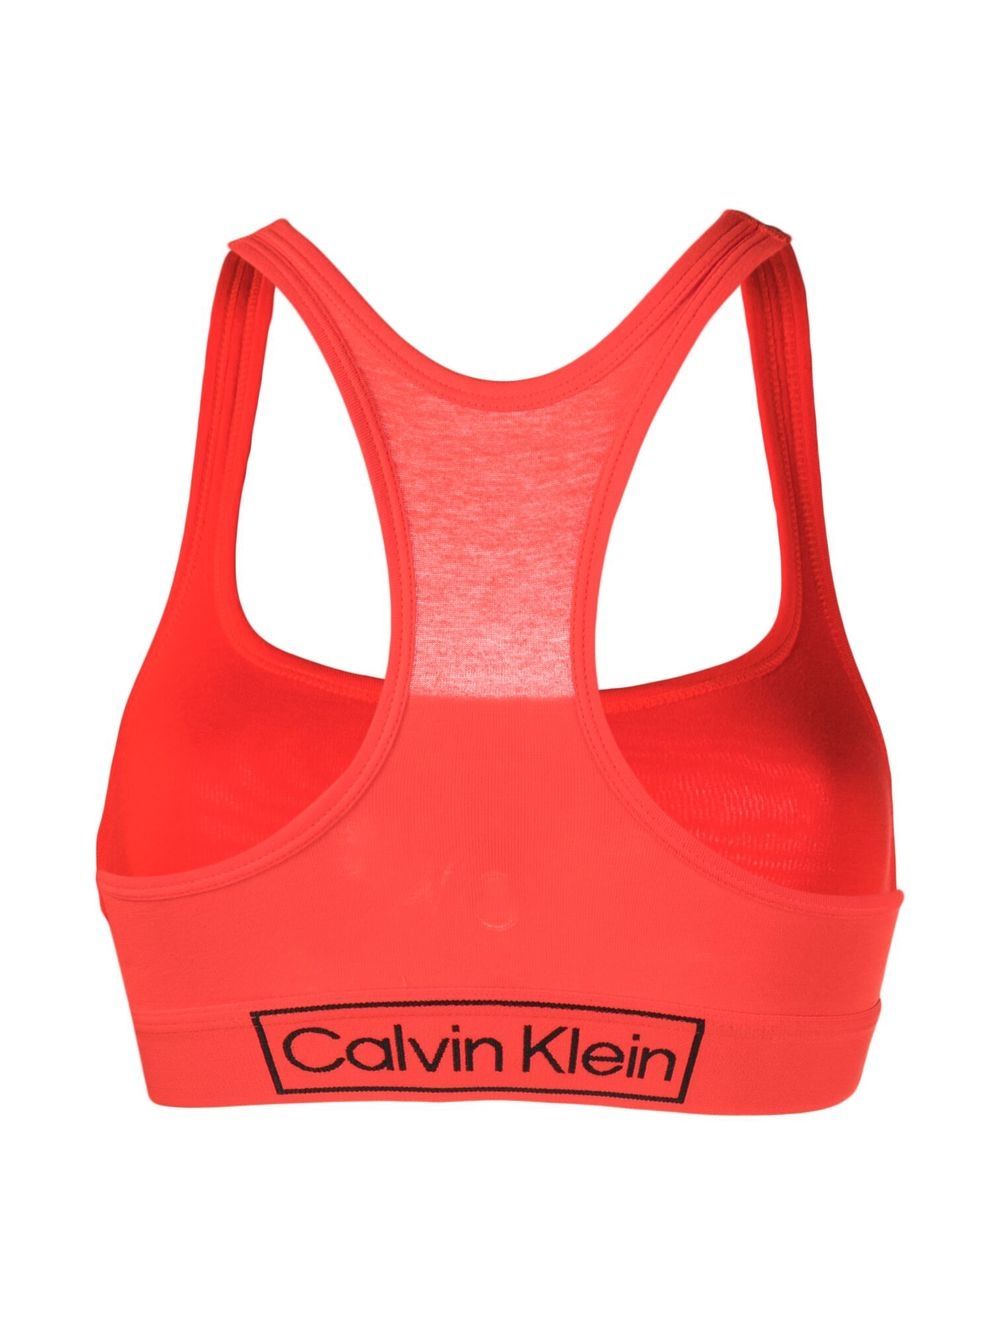 Calvin Klein Bralette met logo - Rood